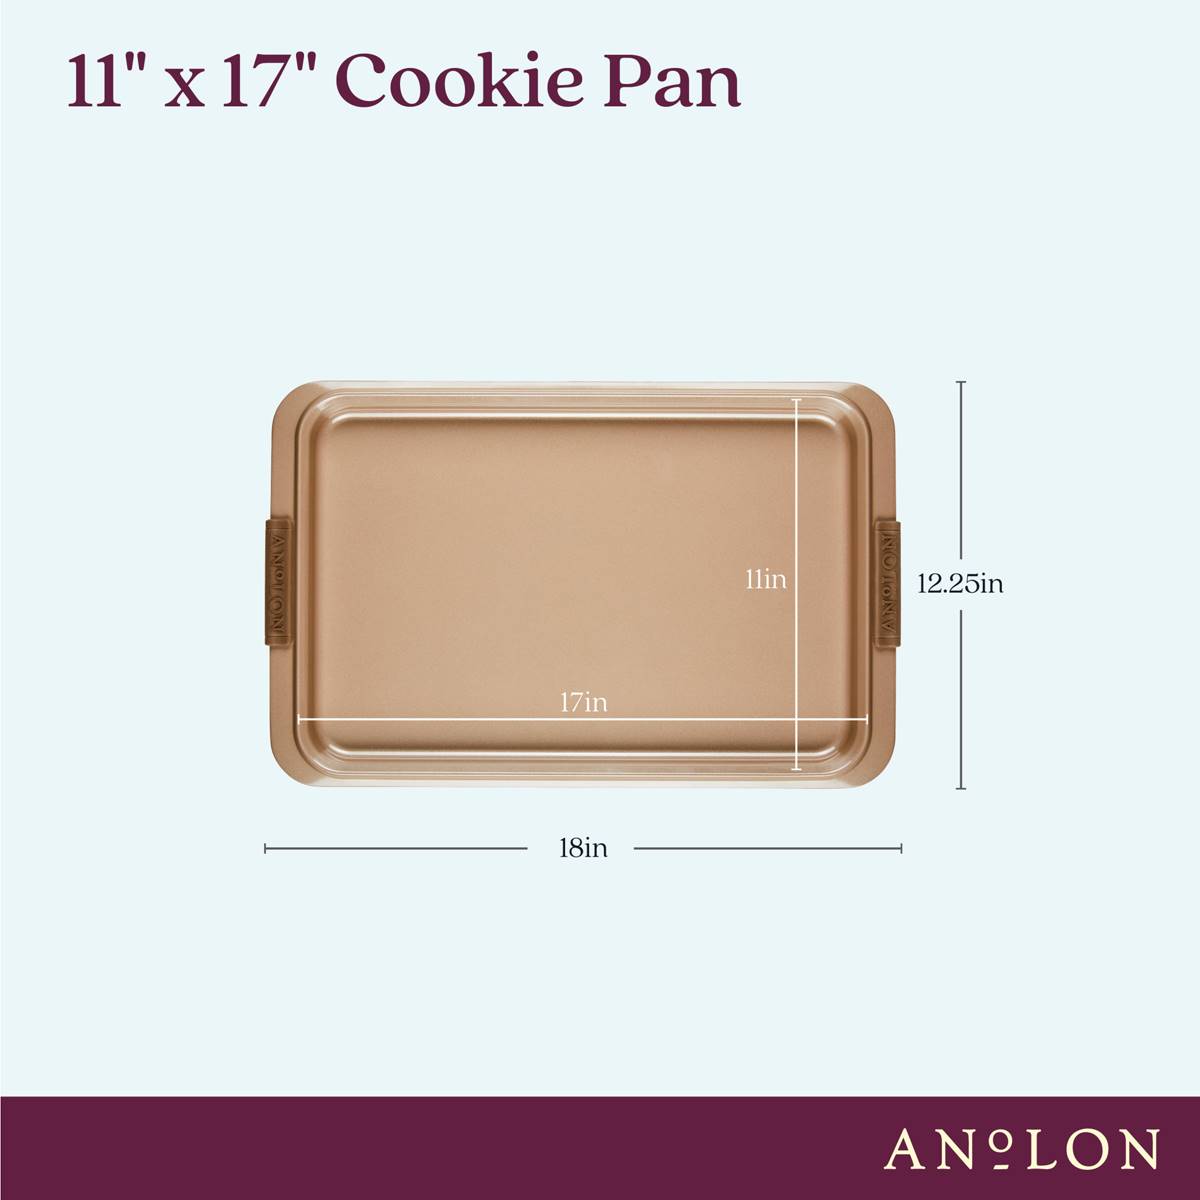 Anolon(R) Advanced Cookie Pan-11x17